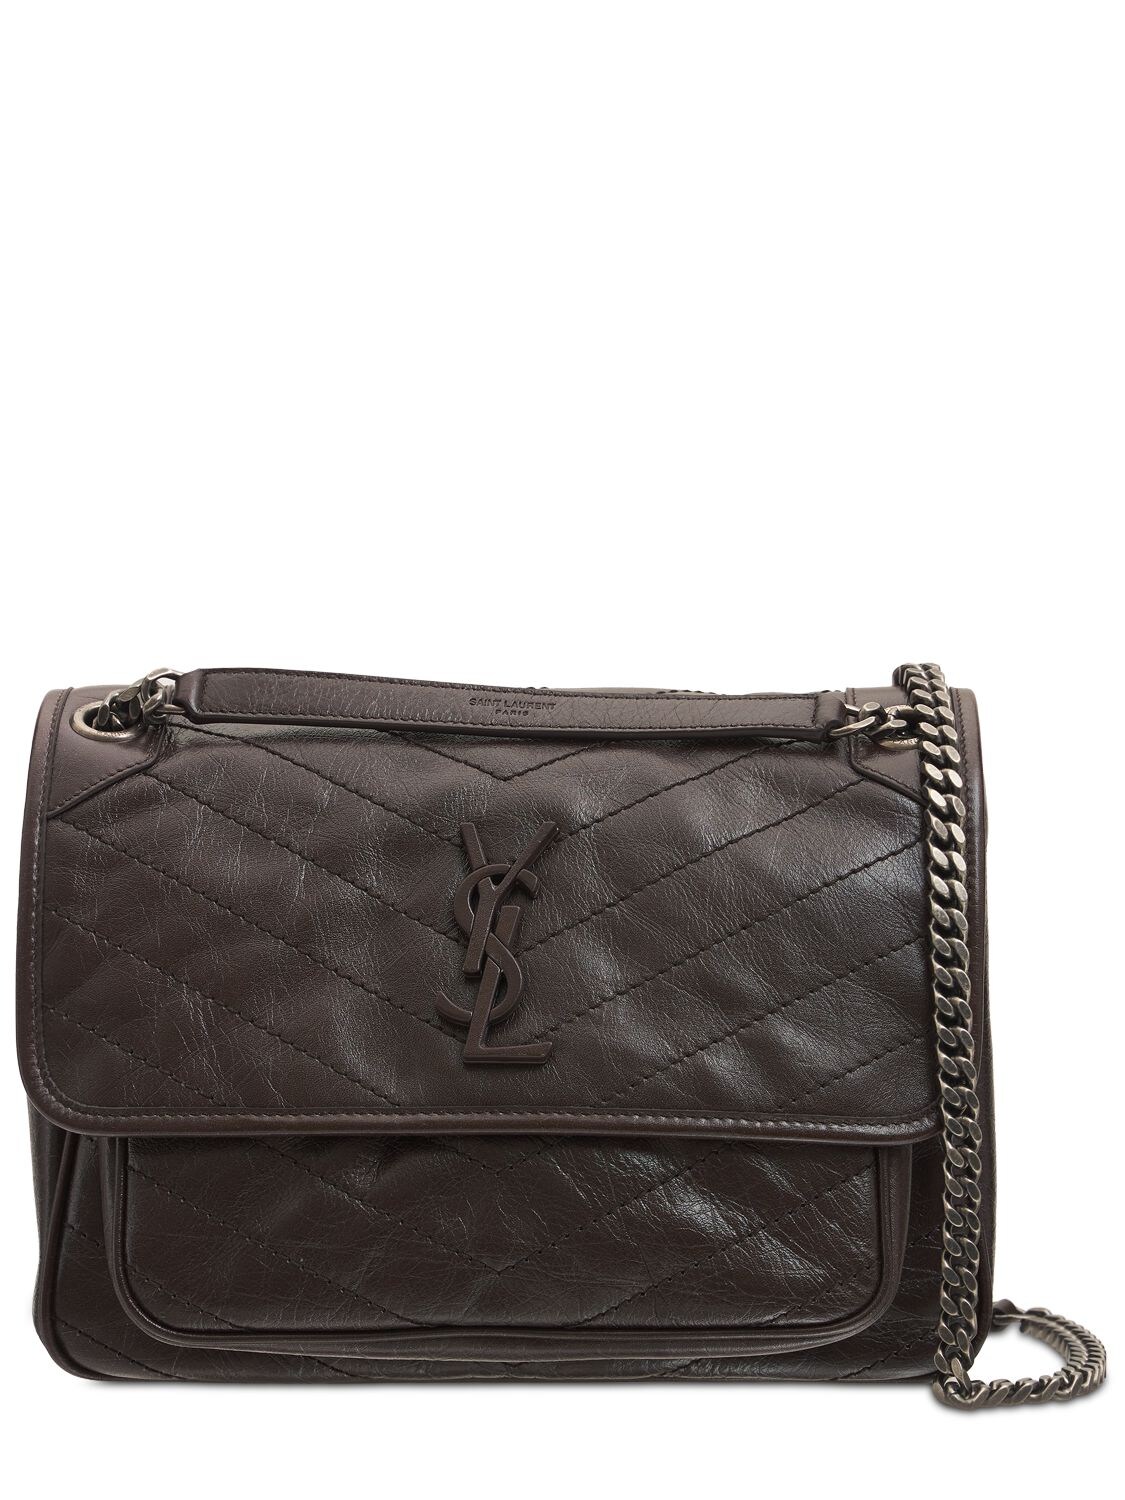 Medium Niky Monogram Leather Bag